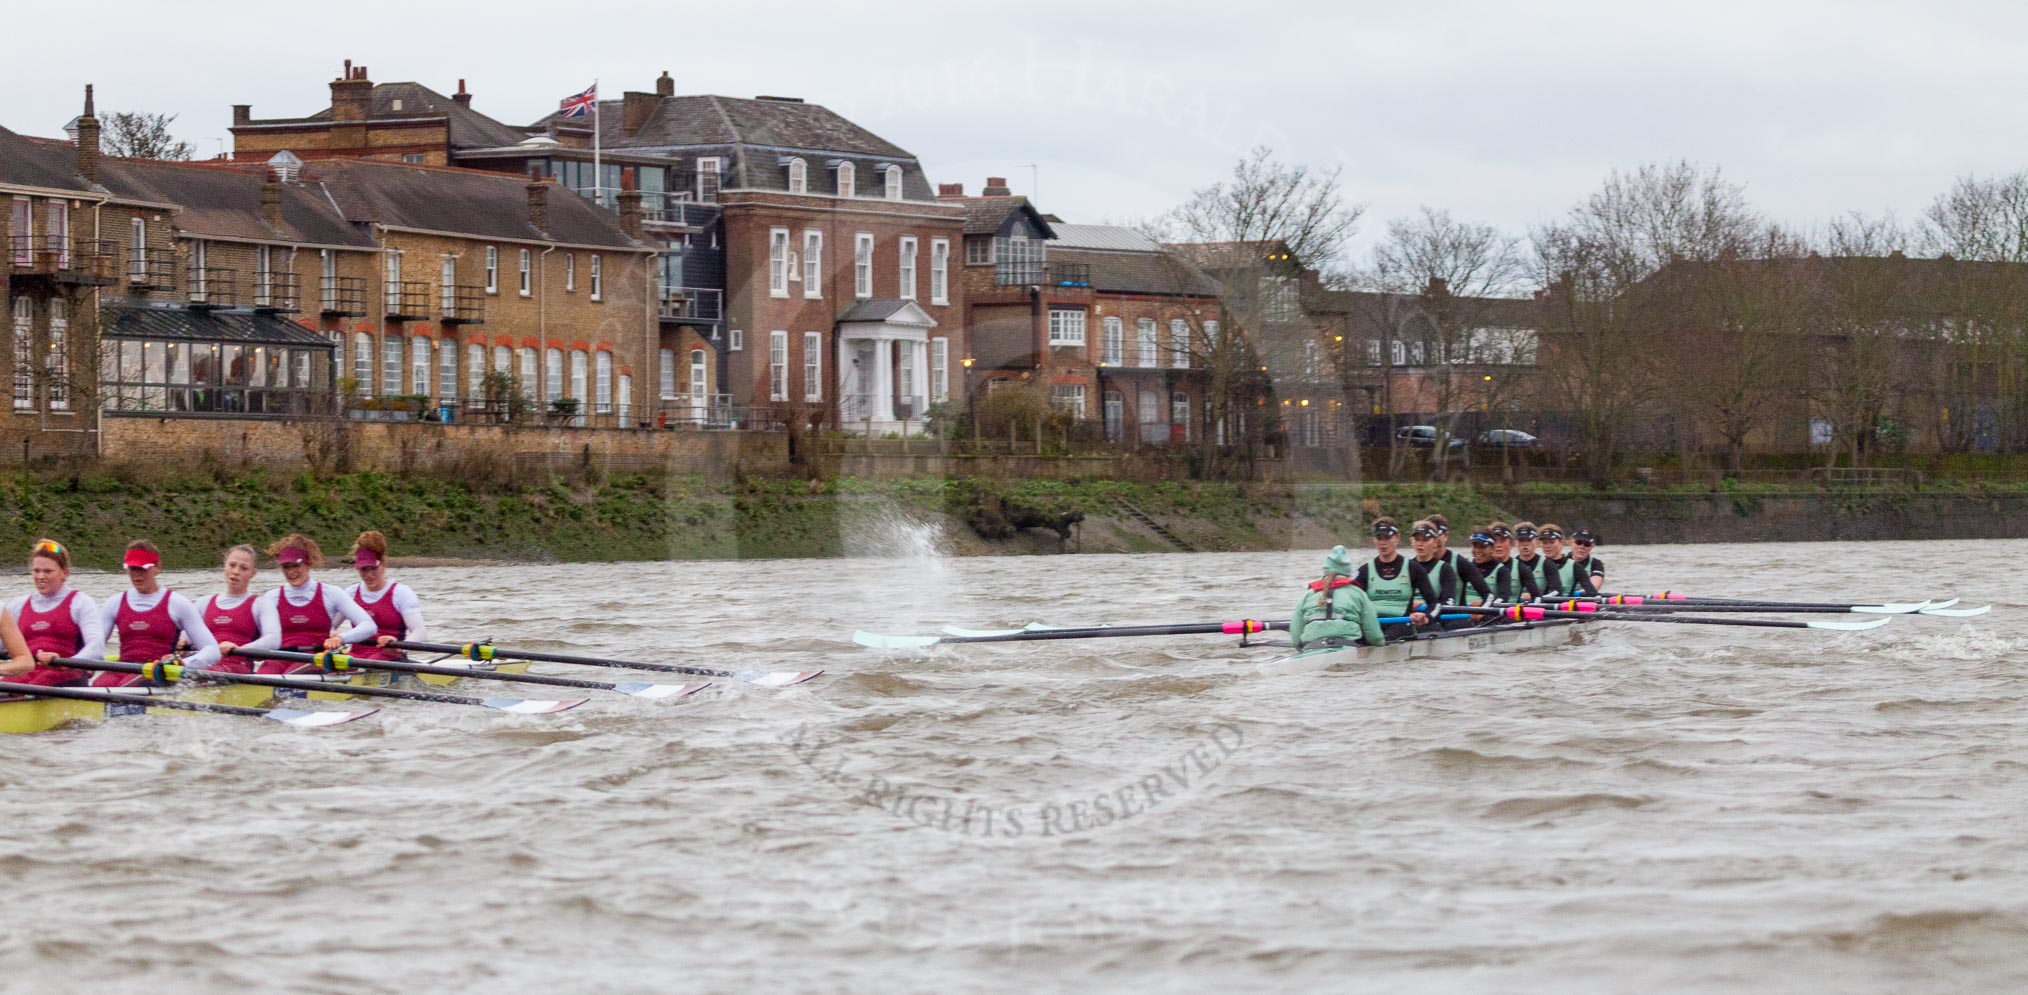 The Boat Race season 2016 - Women's Boat Race Fixture CUWBC vs OBUBC.
River Thames between Putney Bridge and Mortlake,
London SW15,

United Kingdom,
on 31 January 2016 at 16:25, image #140